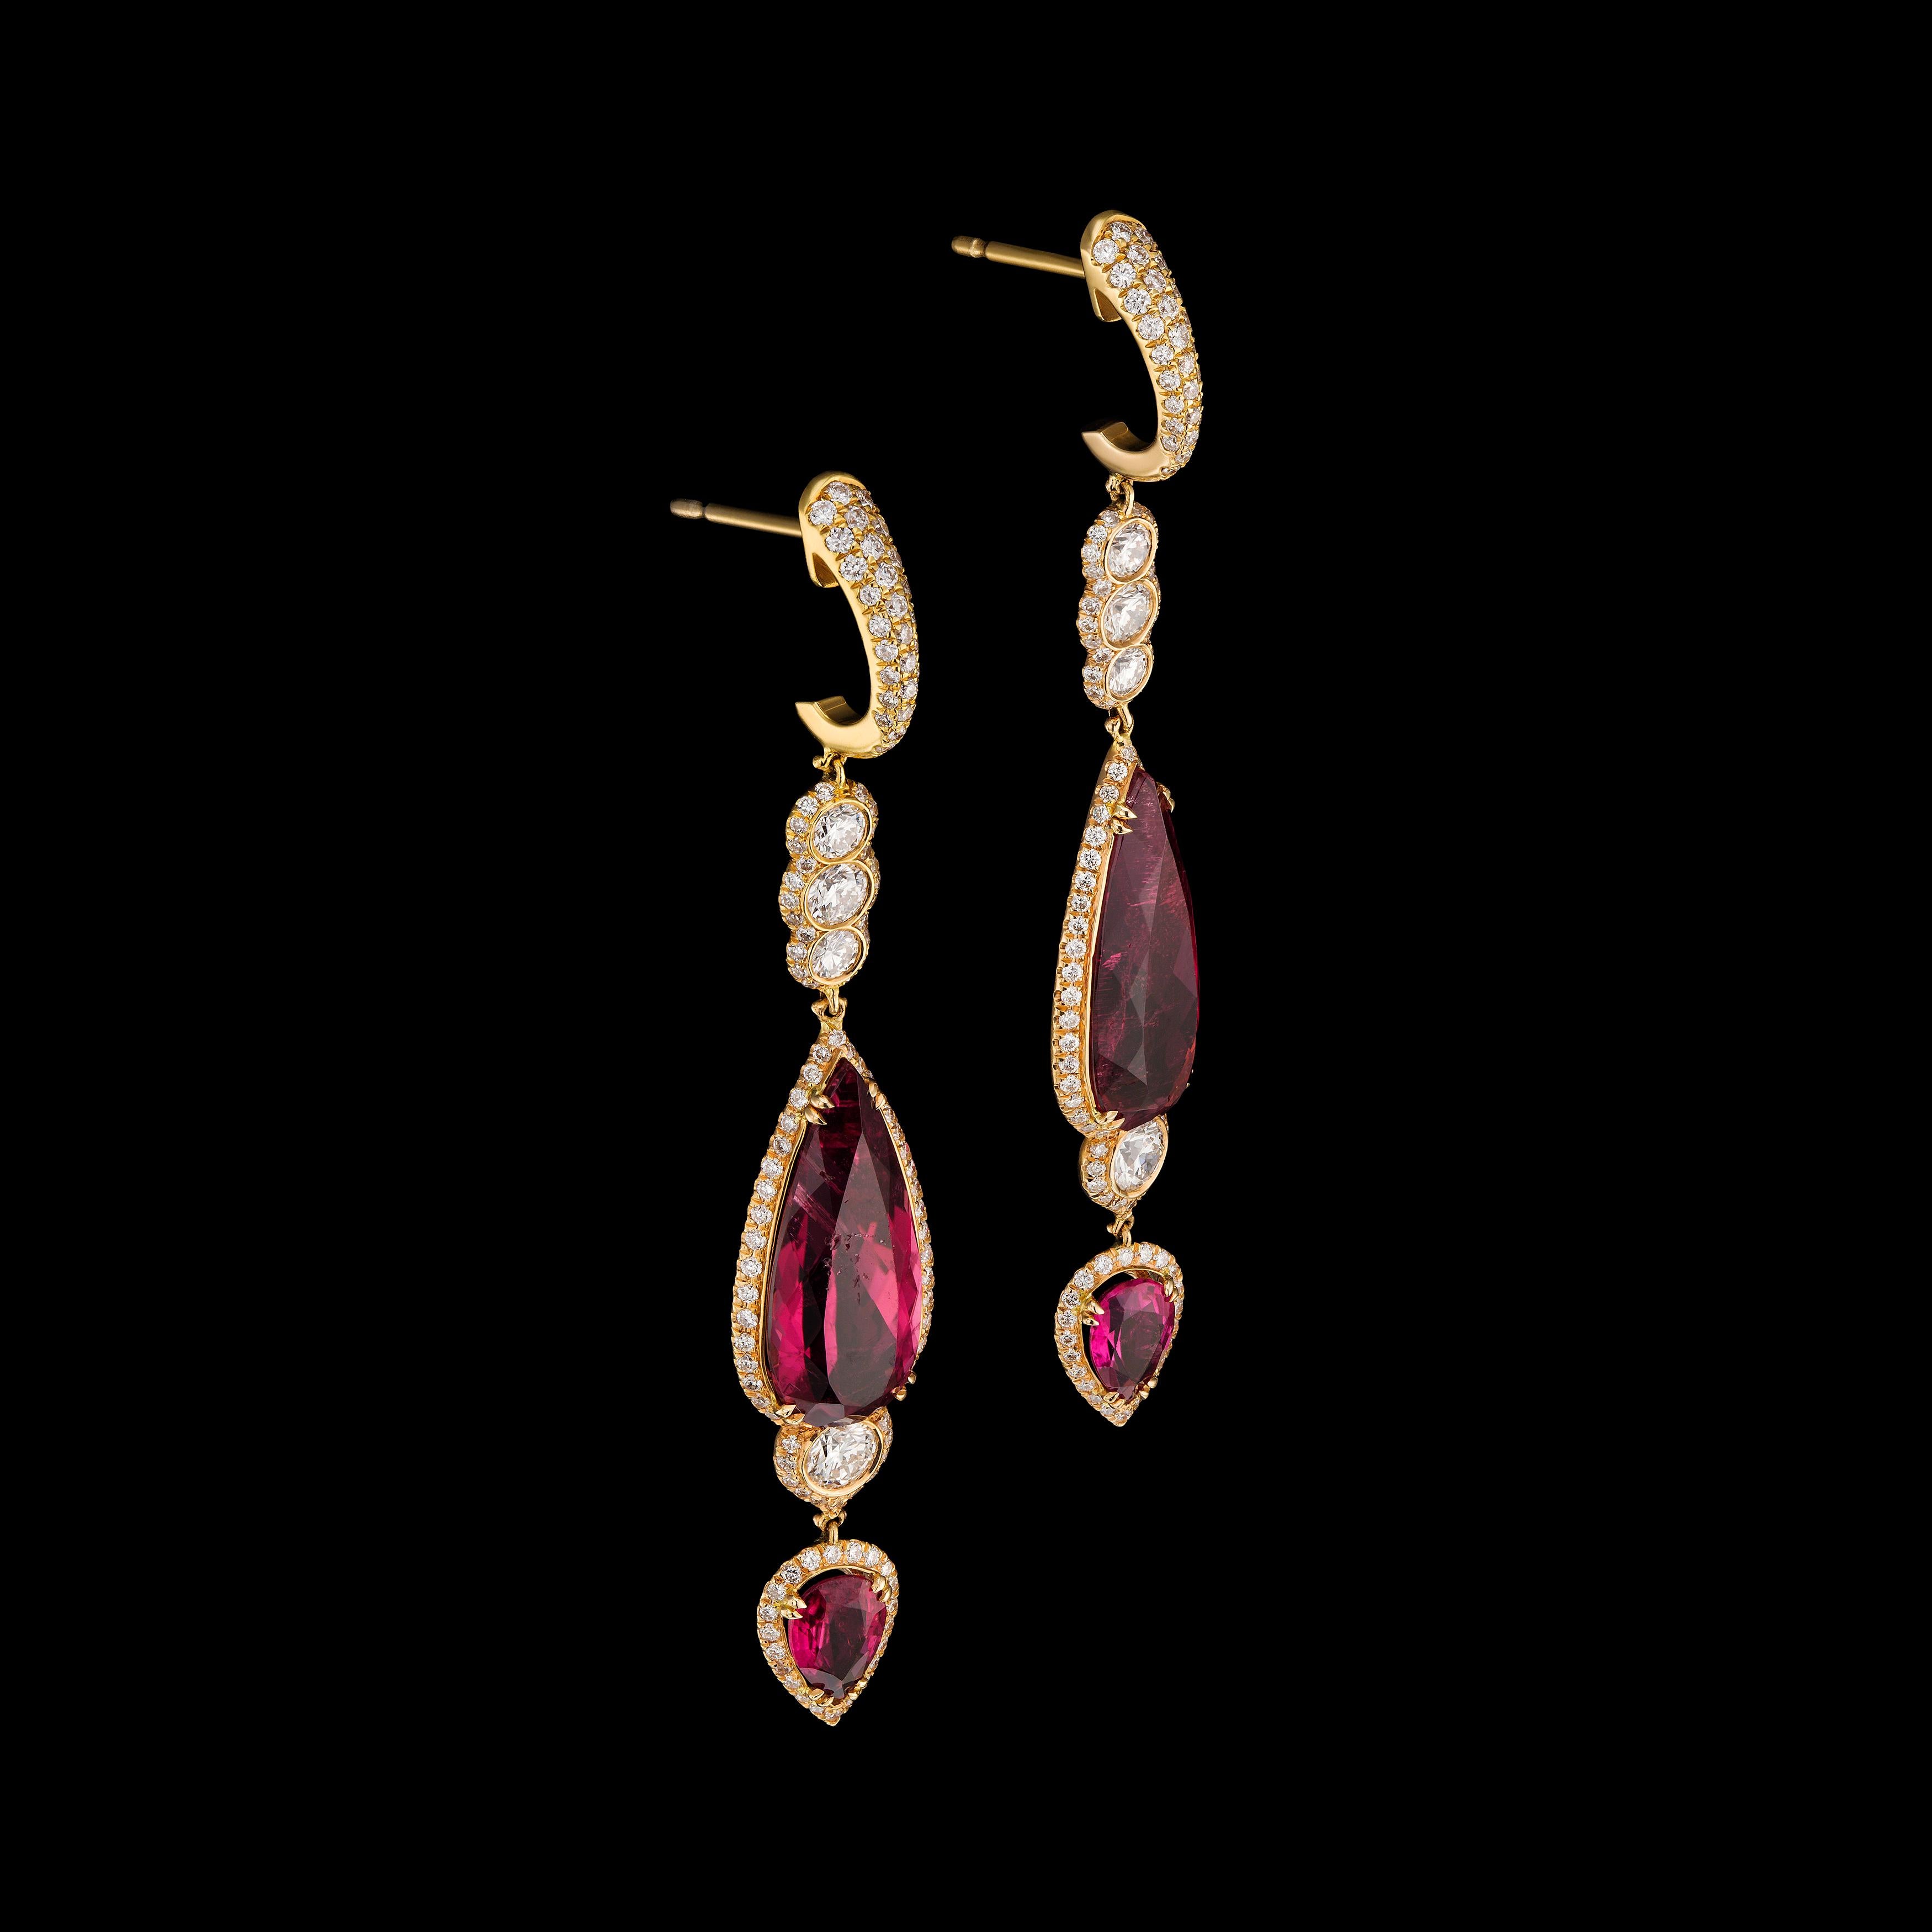 10.75 Carat Red Tourmaline Diamond Dangle Earrings in 18 Karat Rose Gold For Sale 2